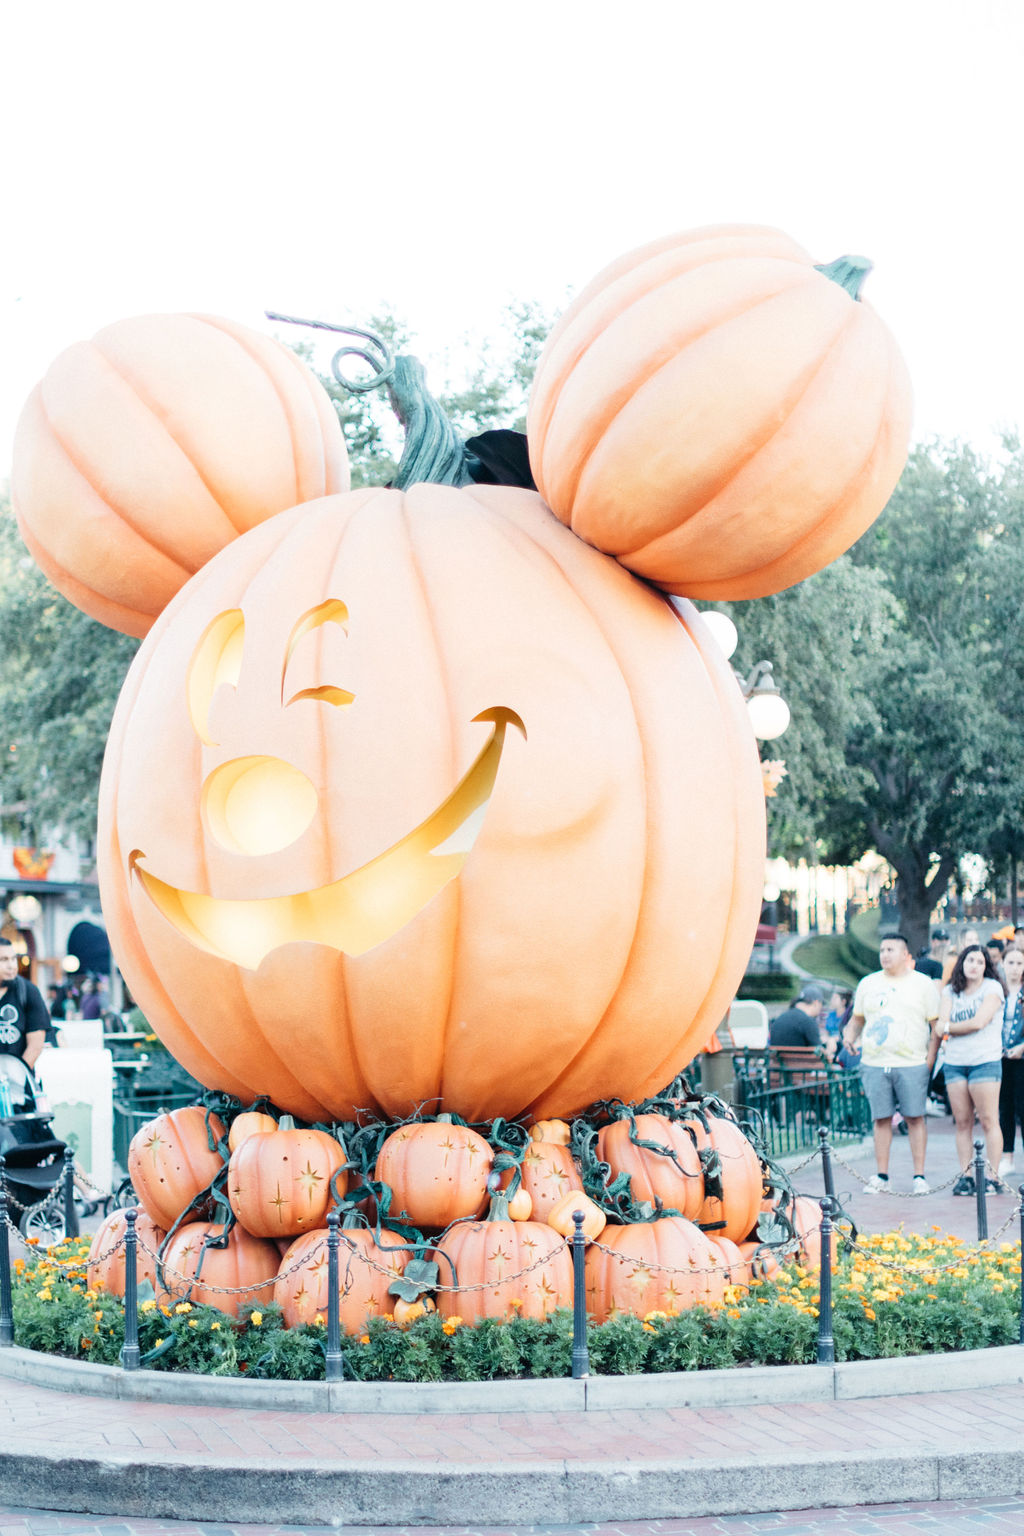 Halloween Time at Disneyland!